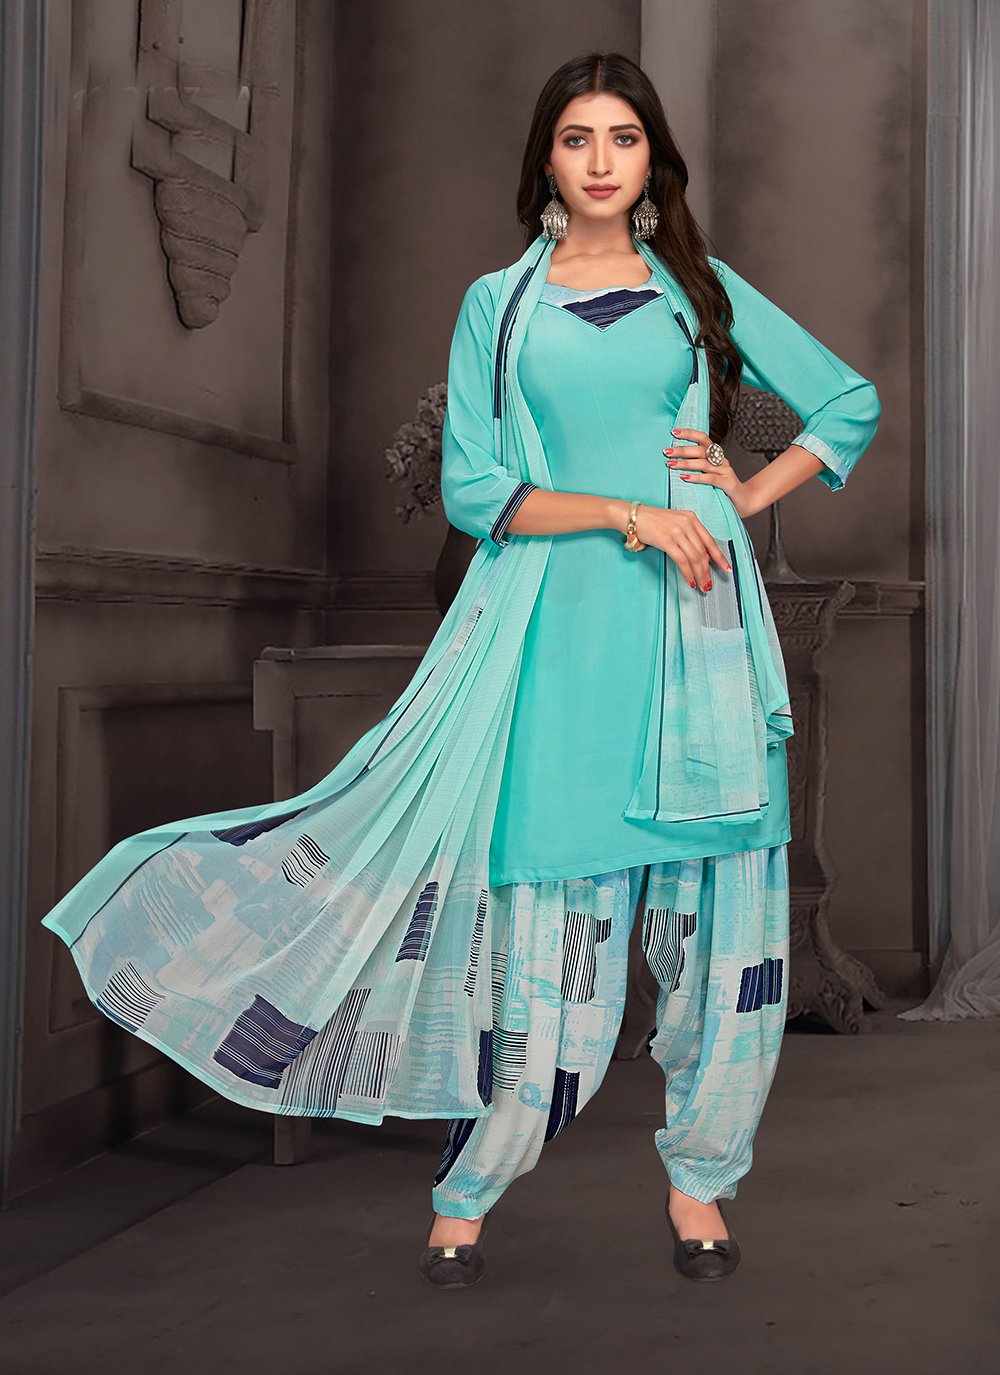 Bollywood Tadka - Punjabi - #ShehnaazGill Beautiful Punjabi Suit Look  #Pollywood #PunjabiSinger #BiggBoss13 #Instagram | Facebook